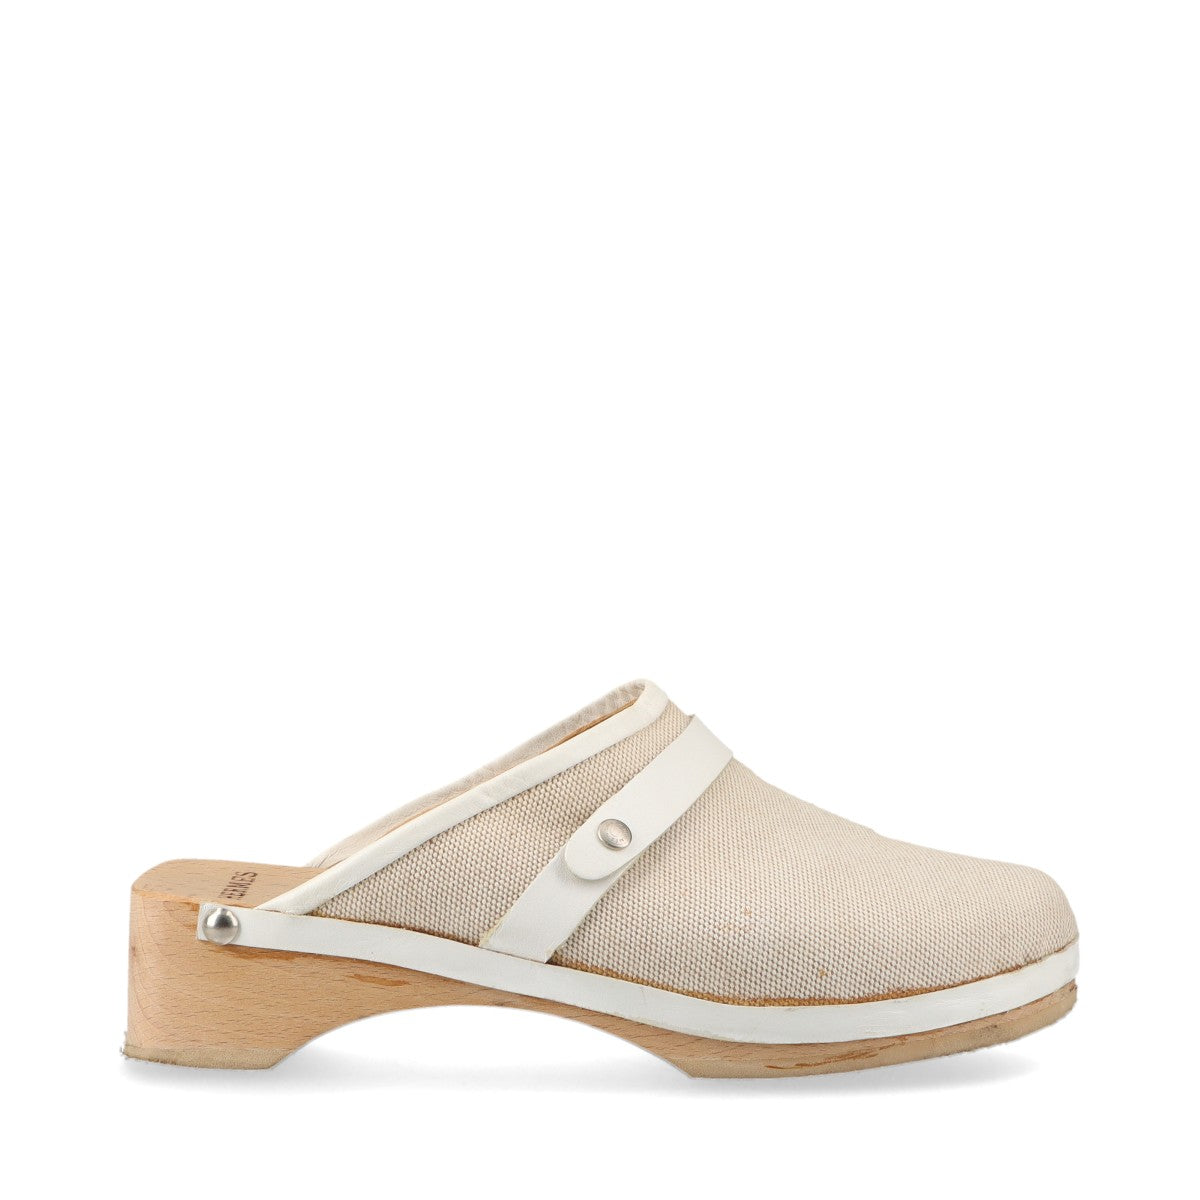 Hermès Canvas & Leather Sandals 35 Ladies' Beige x white Serie Button Wood sole